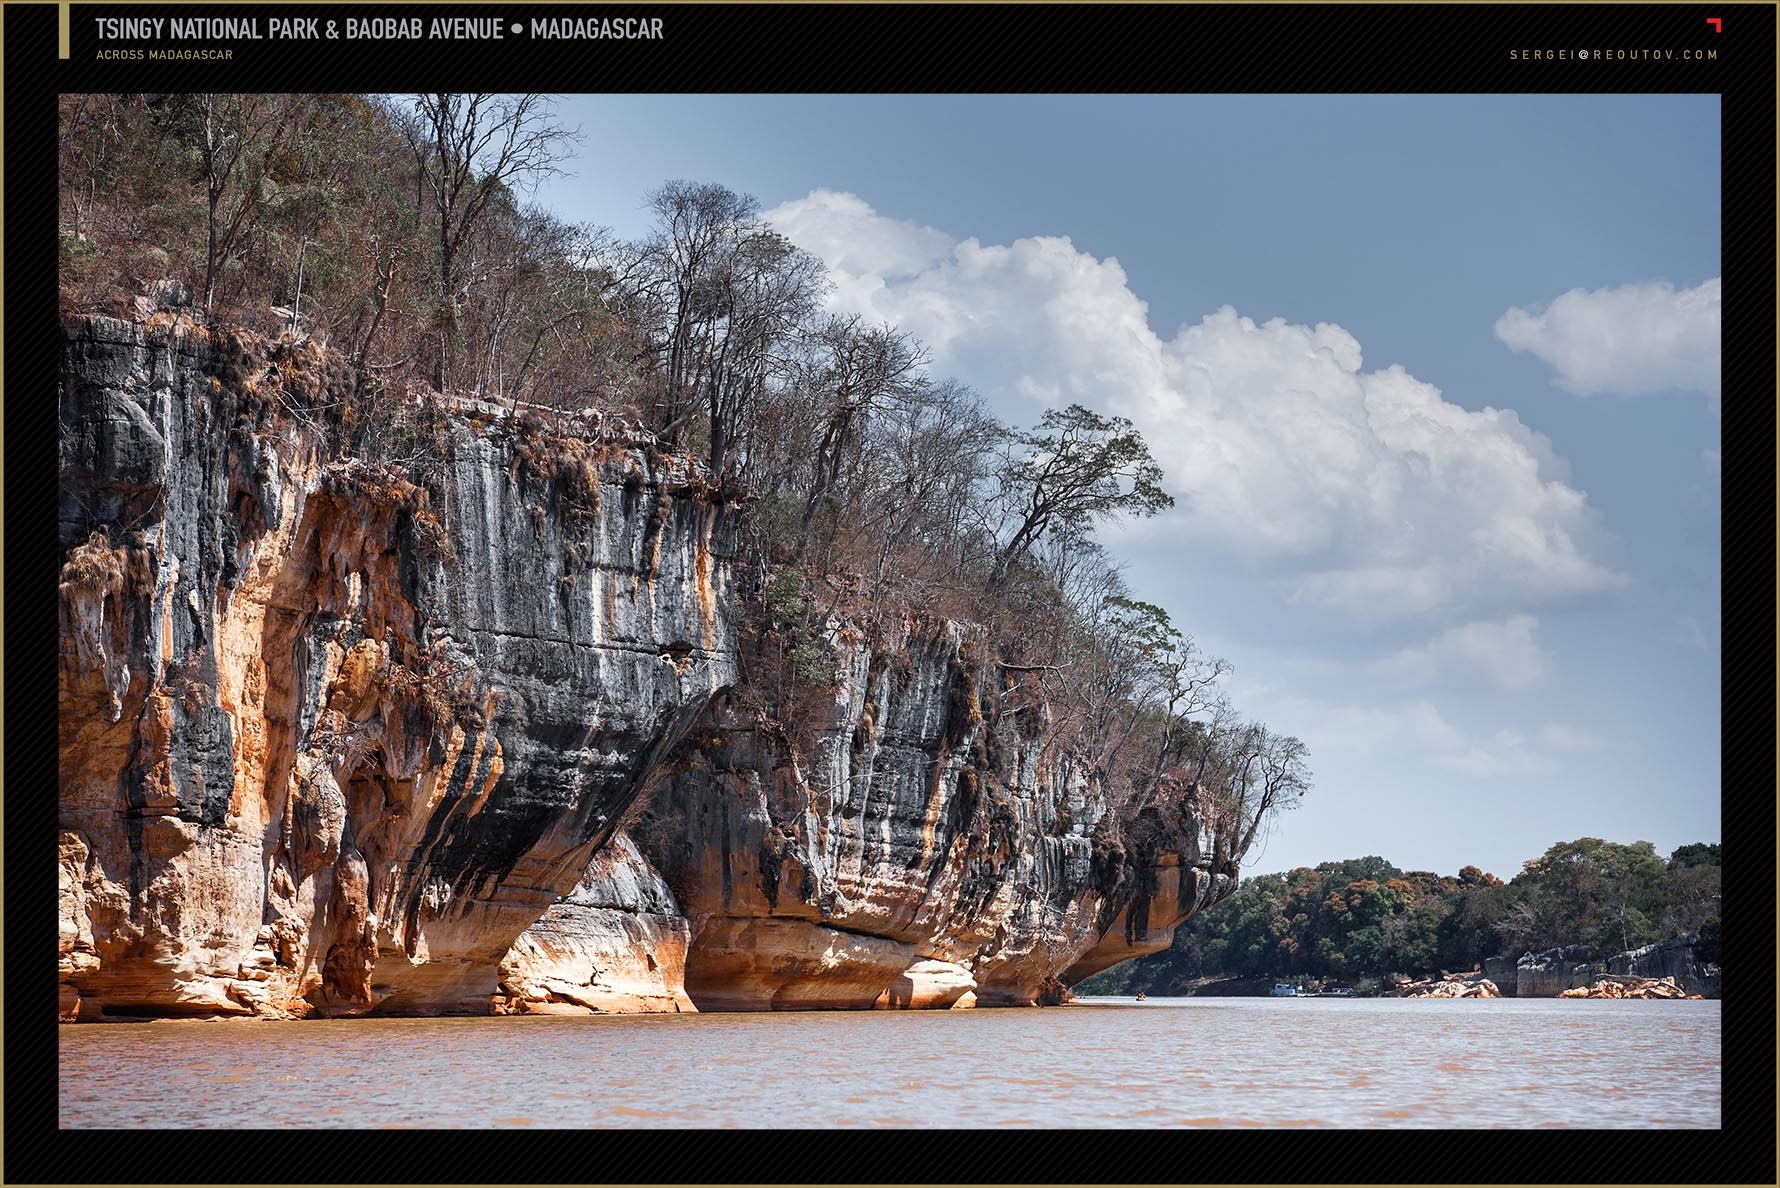 River bank in Madagascar